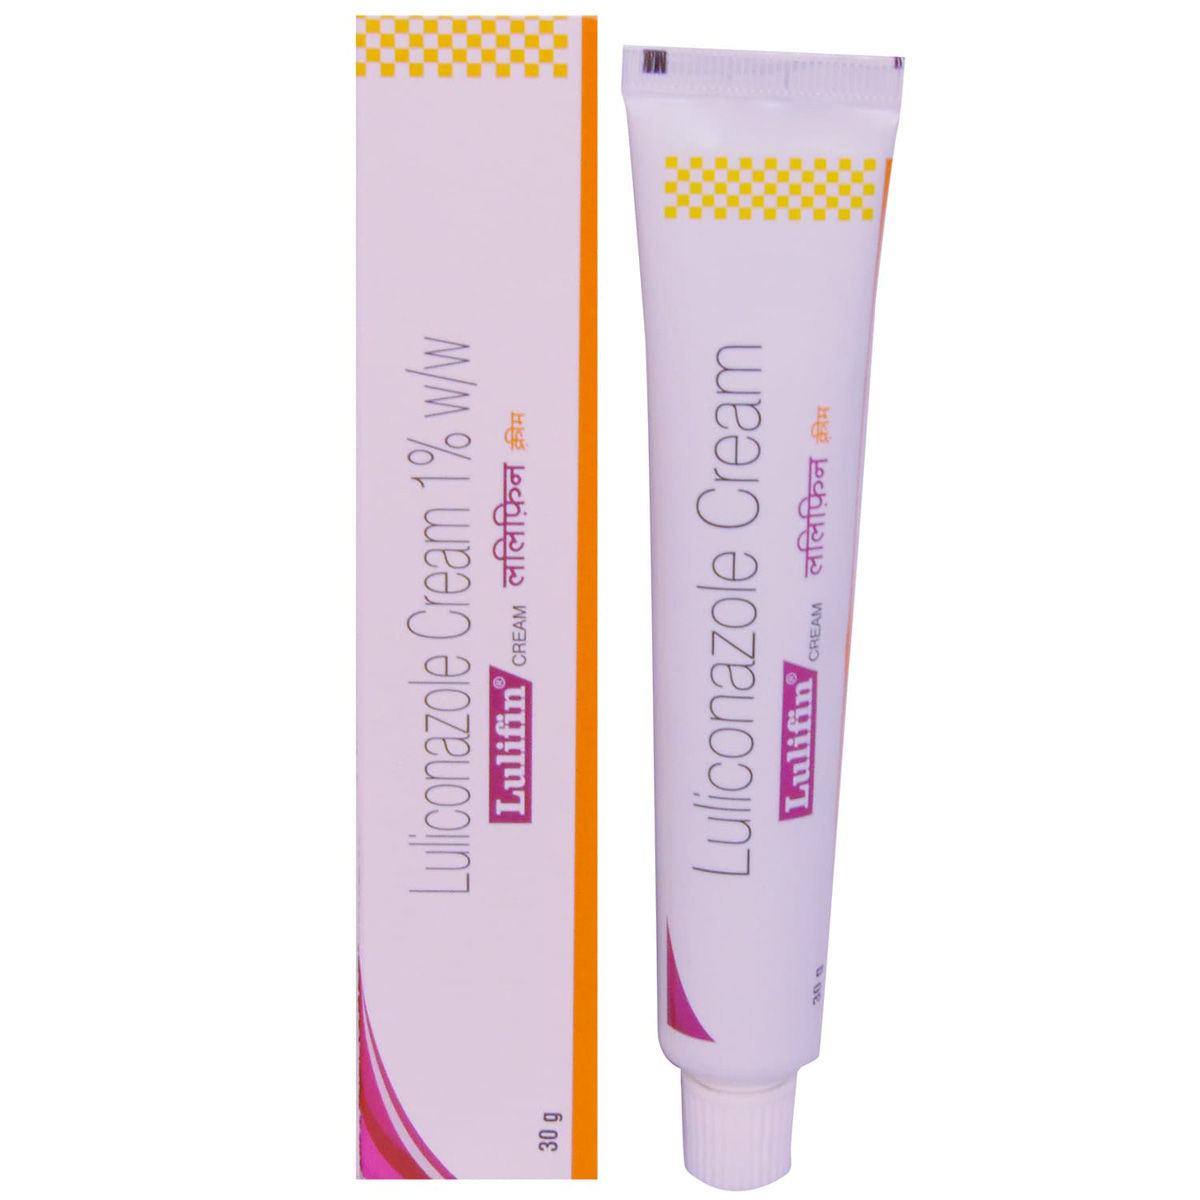 Buy Lulifin Cream 30 gm Online